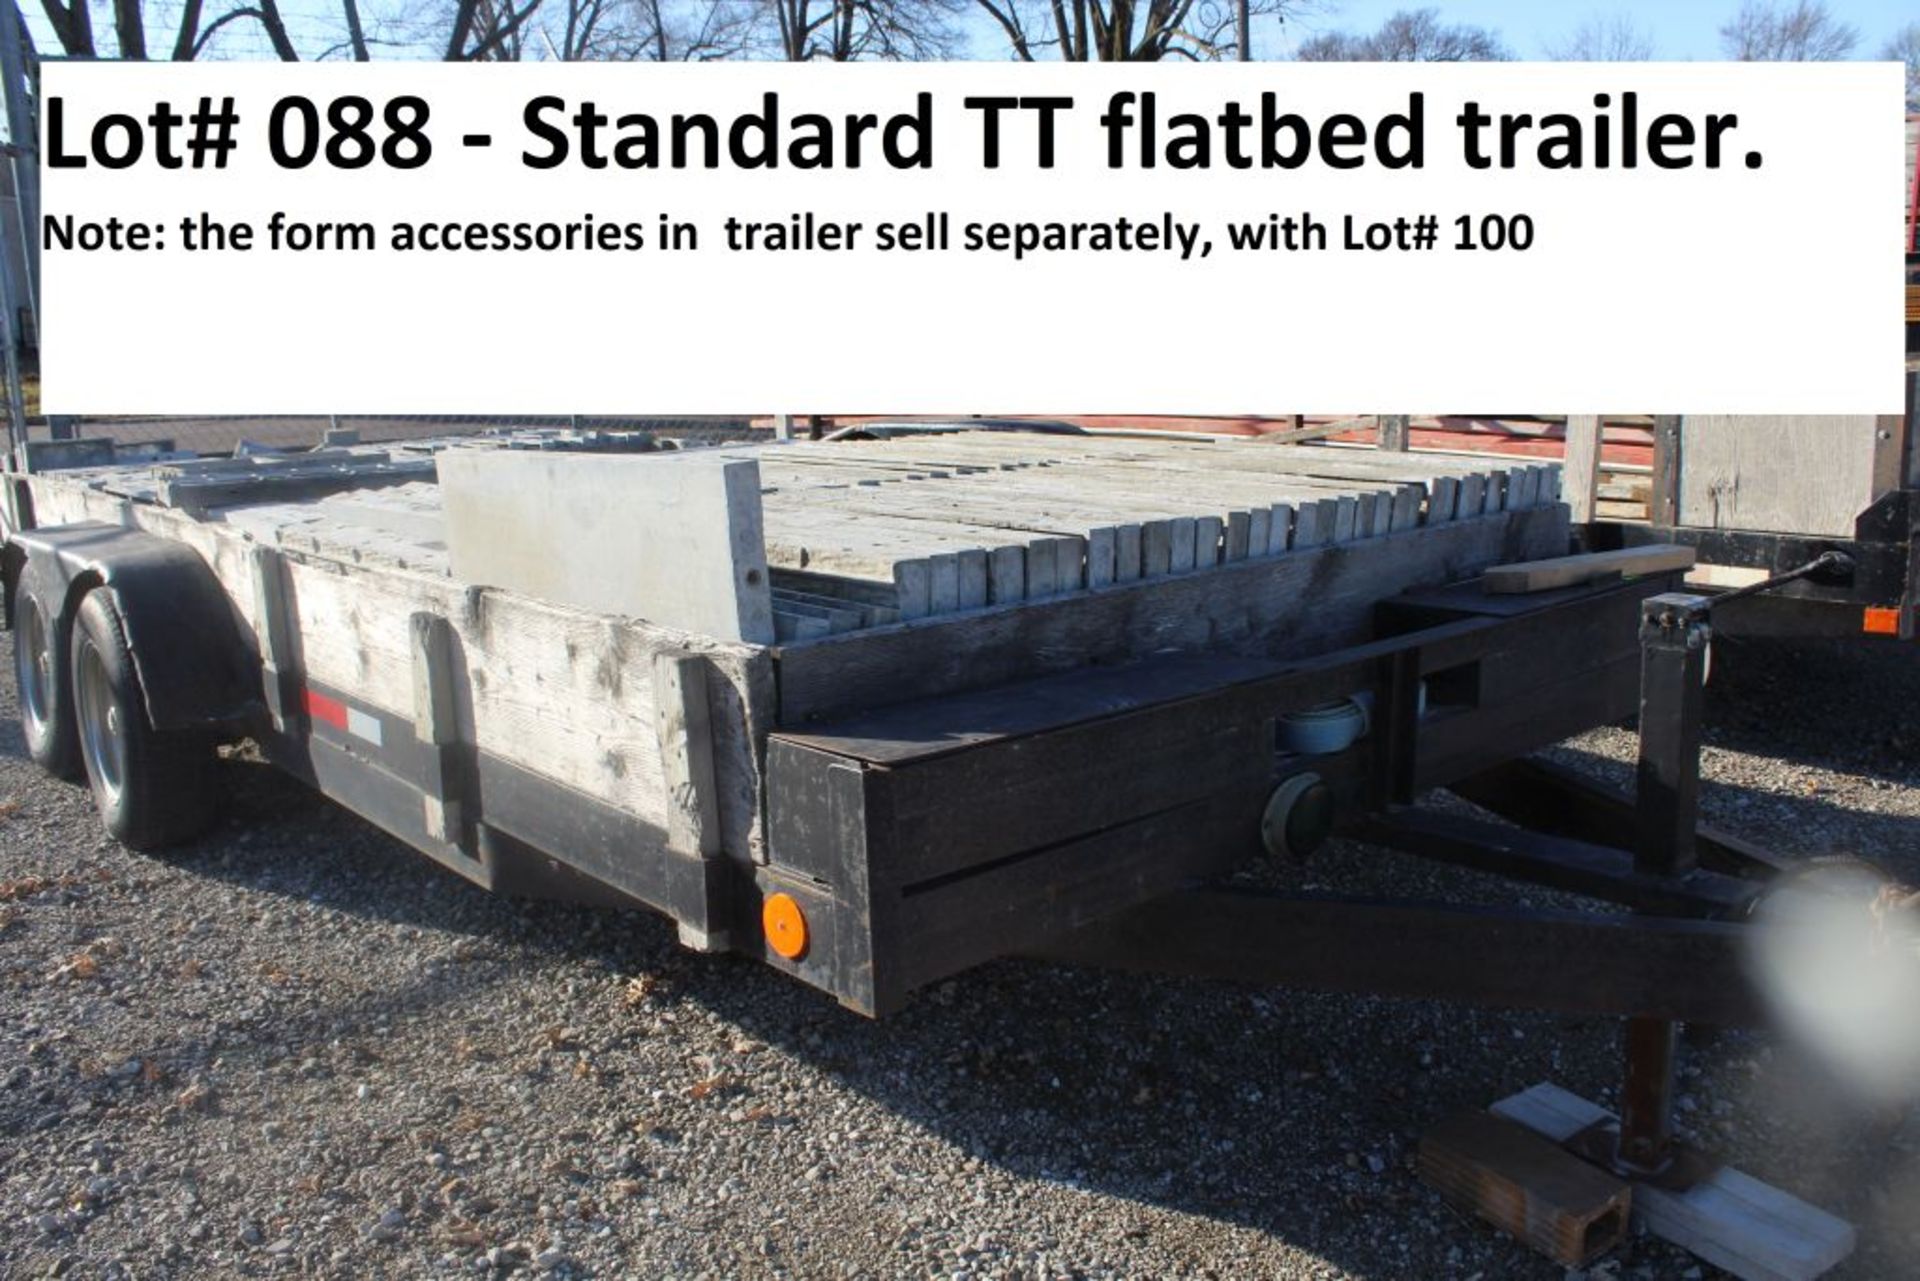 1999 Standard TT flatbed trailer, vin 13YFS1829XC073312, 18' X 82", tandem axle, 205/75/R15 tires, - Image 2 of 3